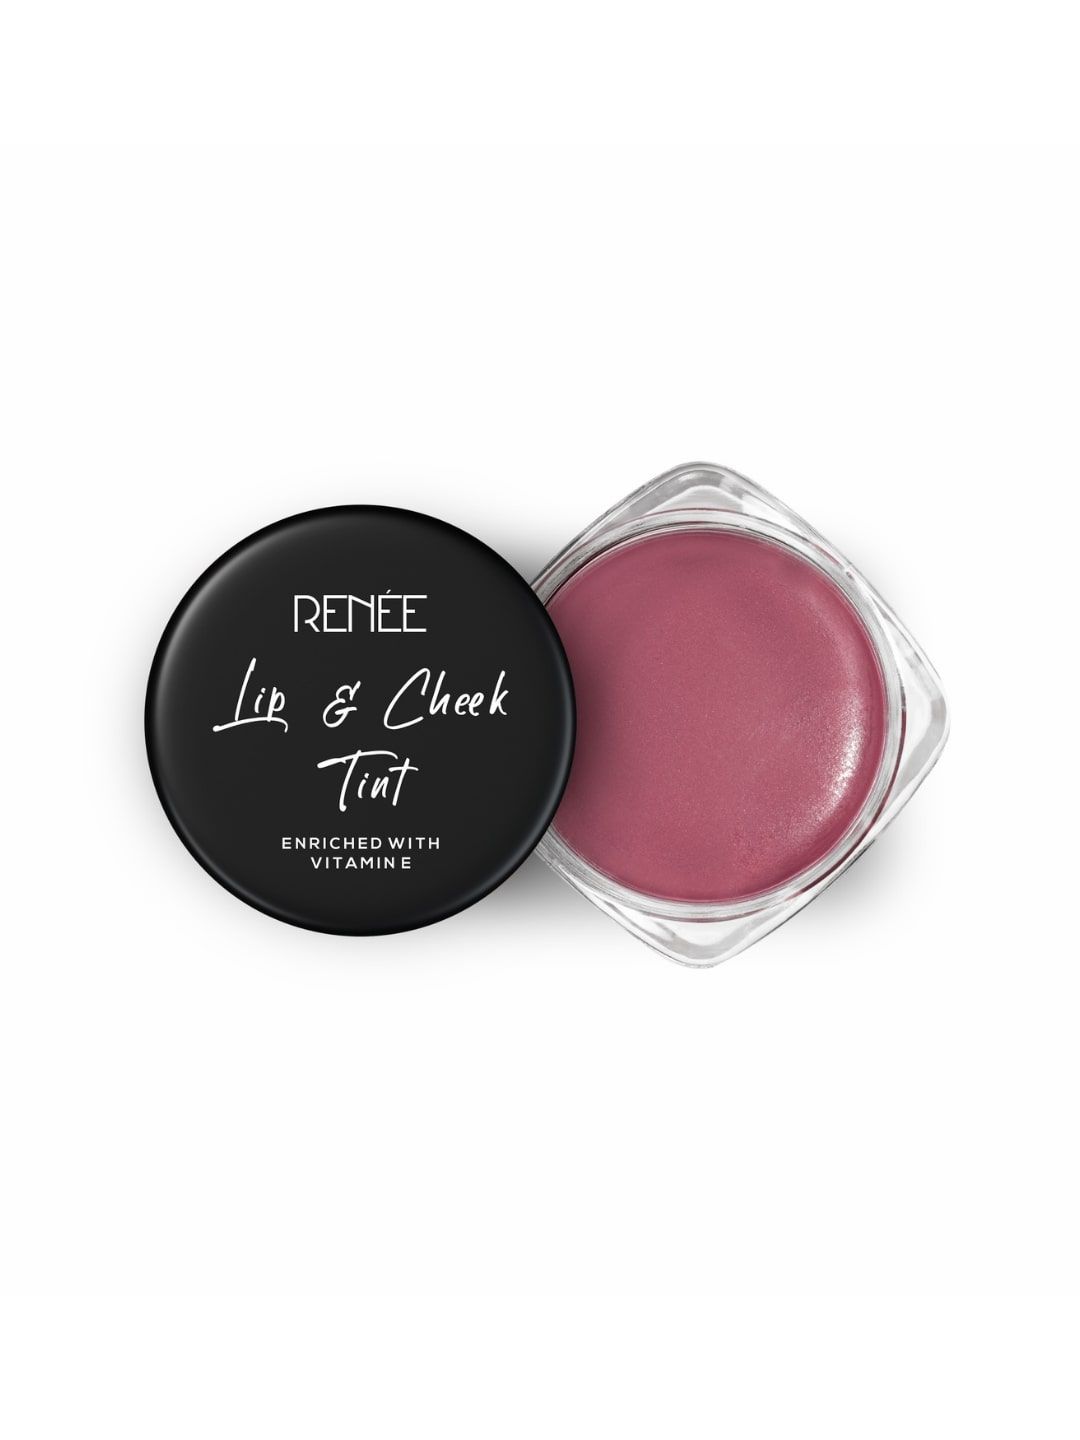 RENEE Lip & Cheek Tint - Pandora Pink 8g Price in India